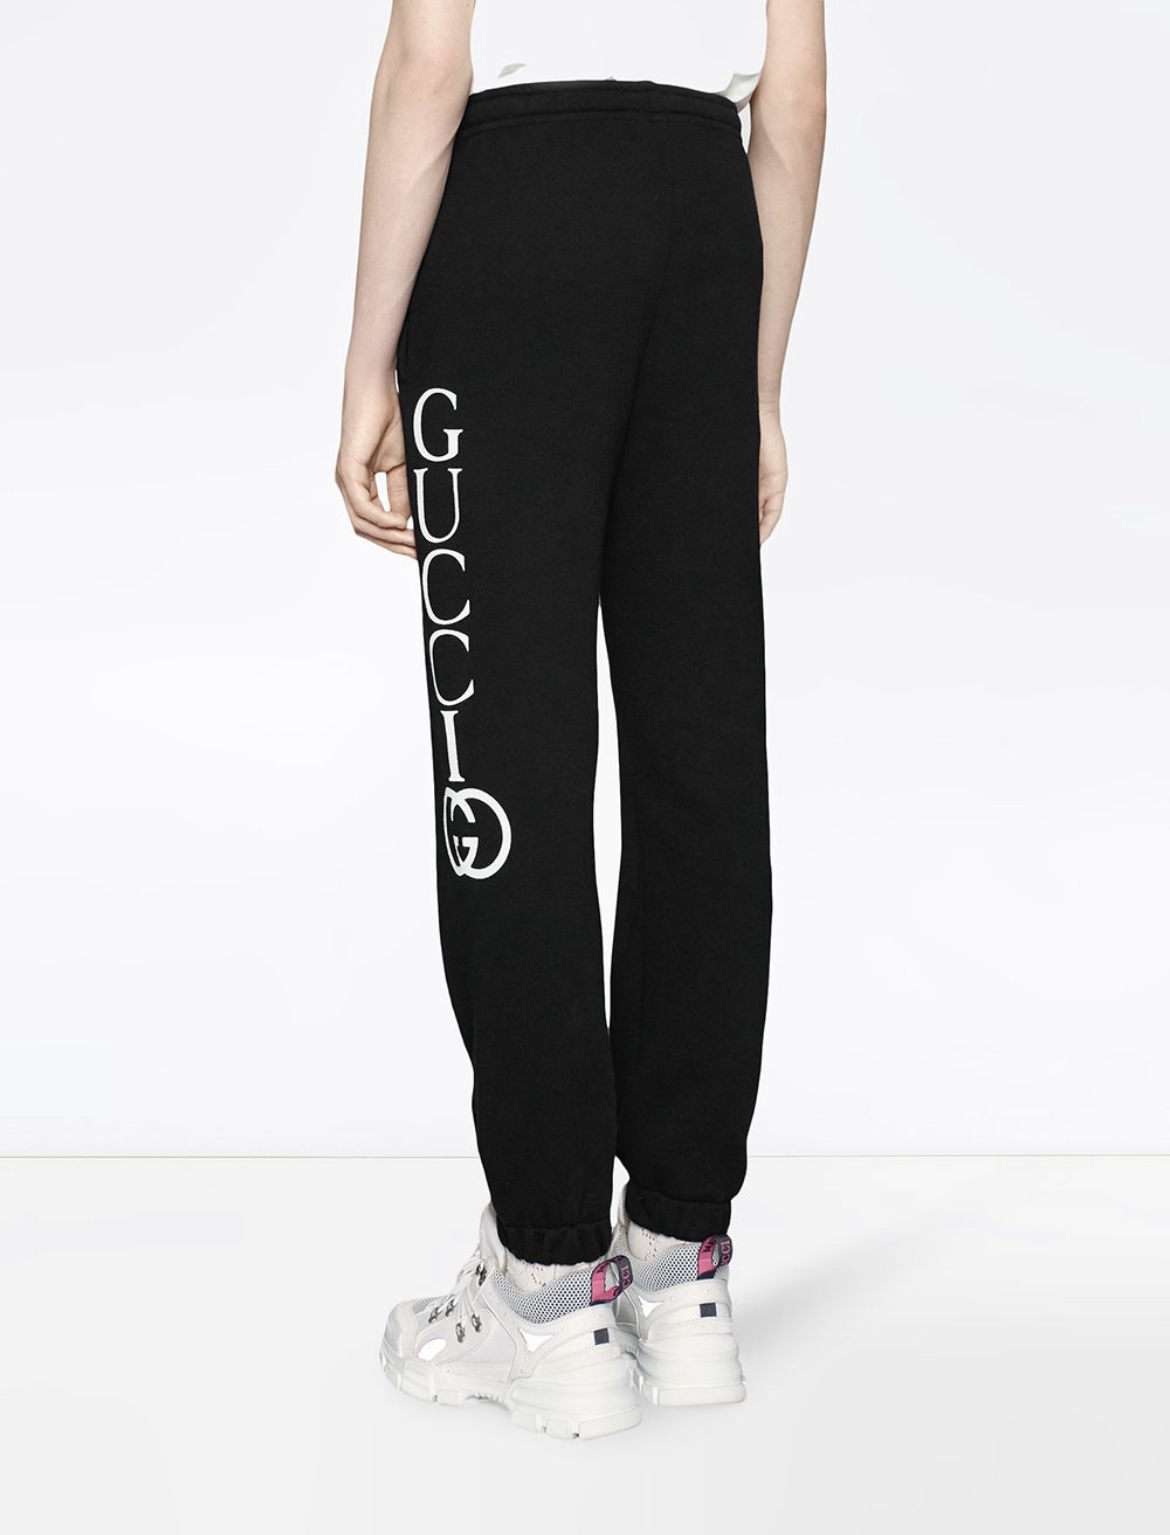 Gucci jogging pants with Gucci print